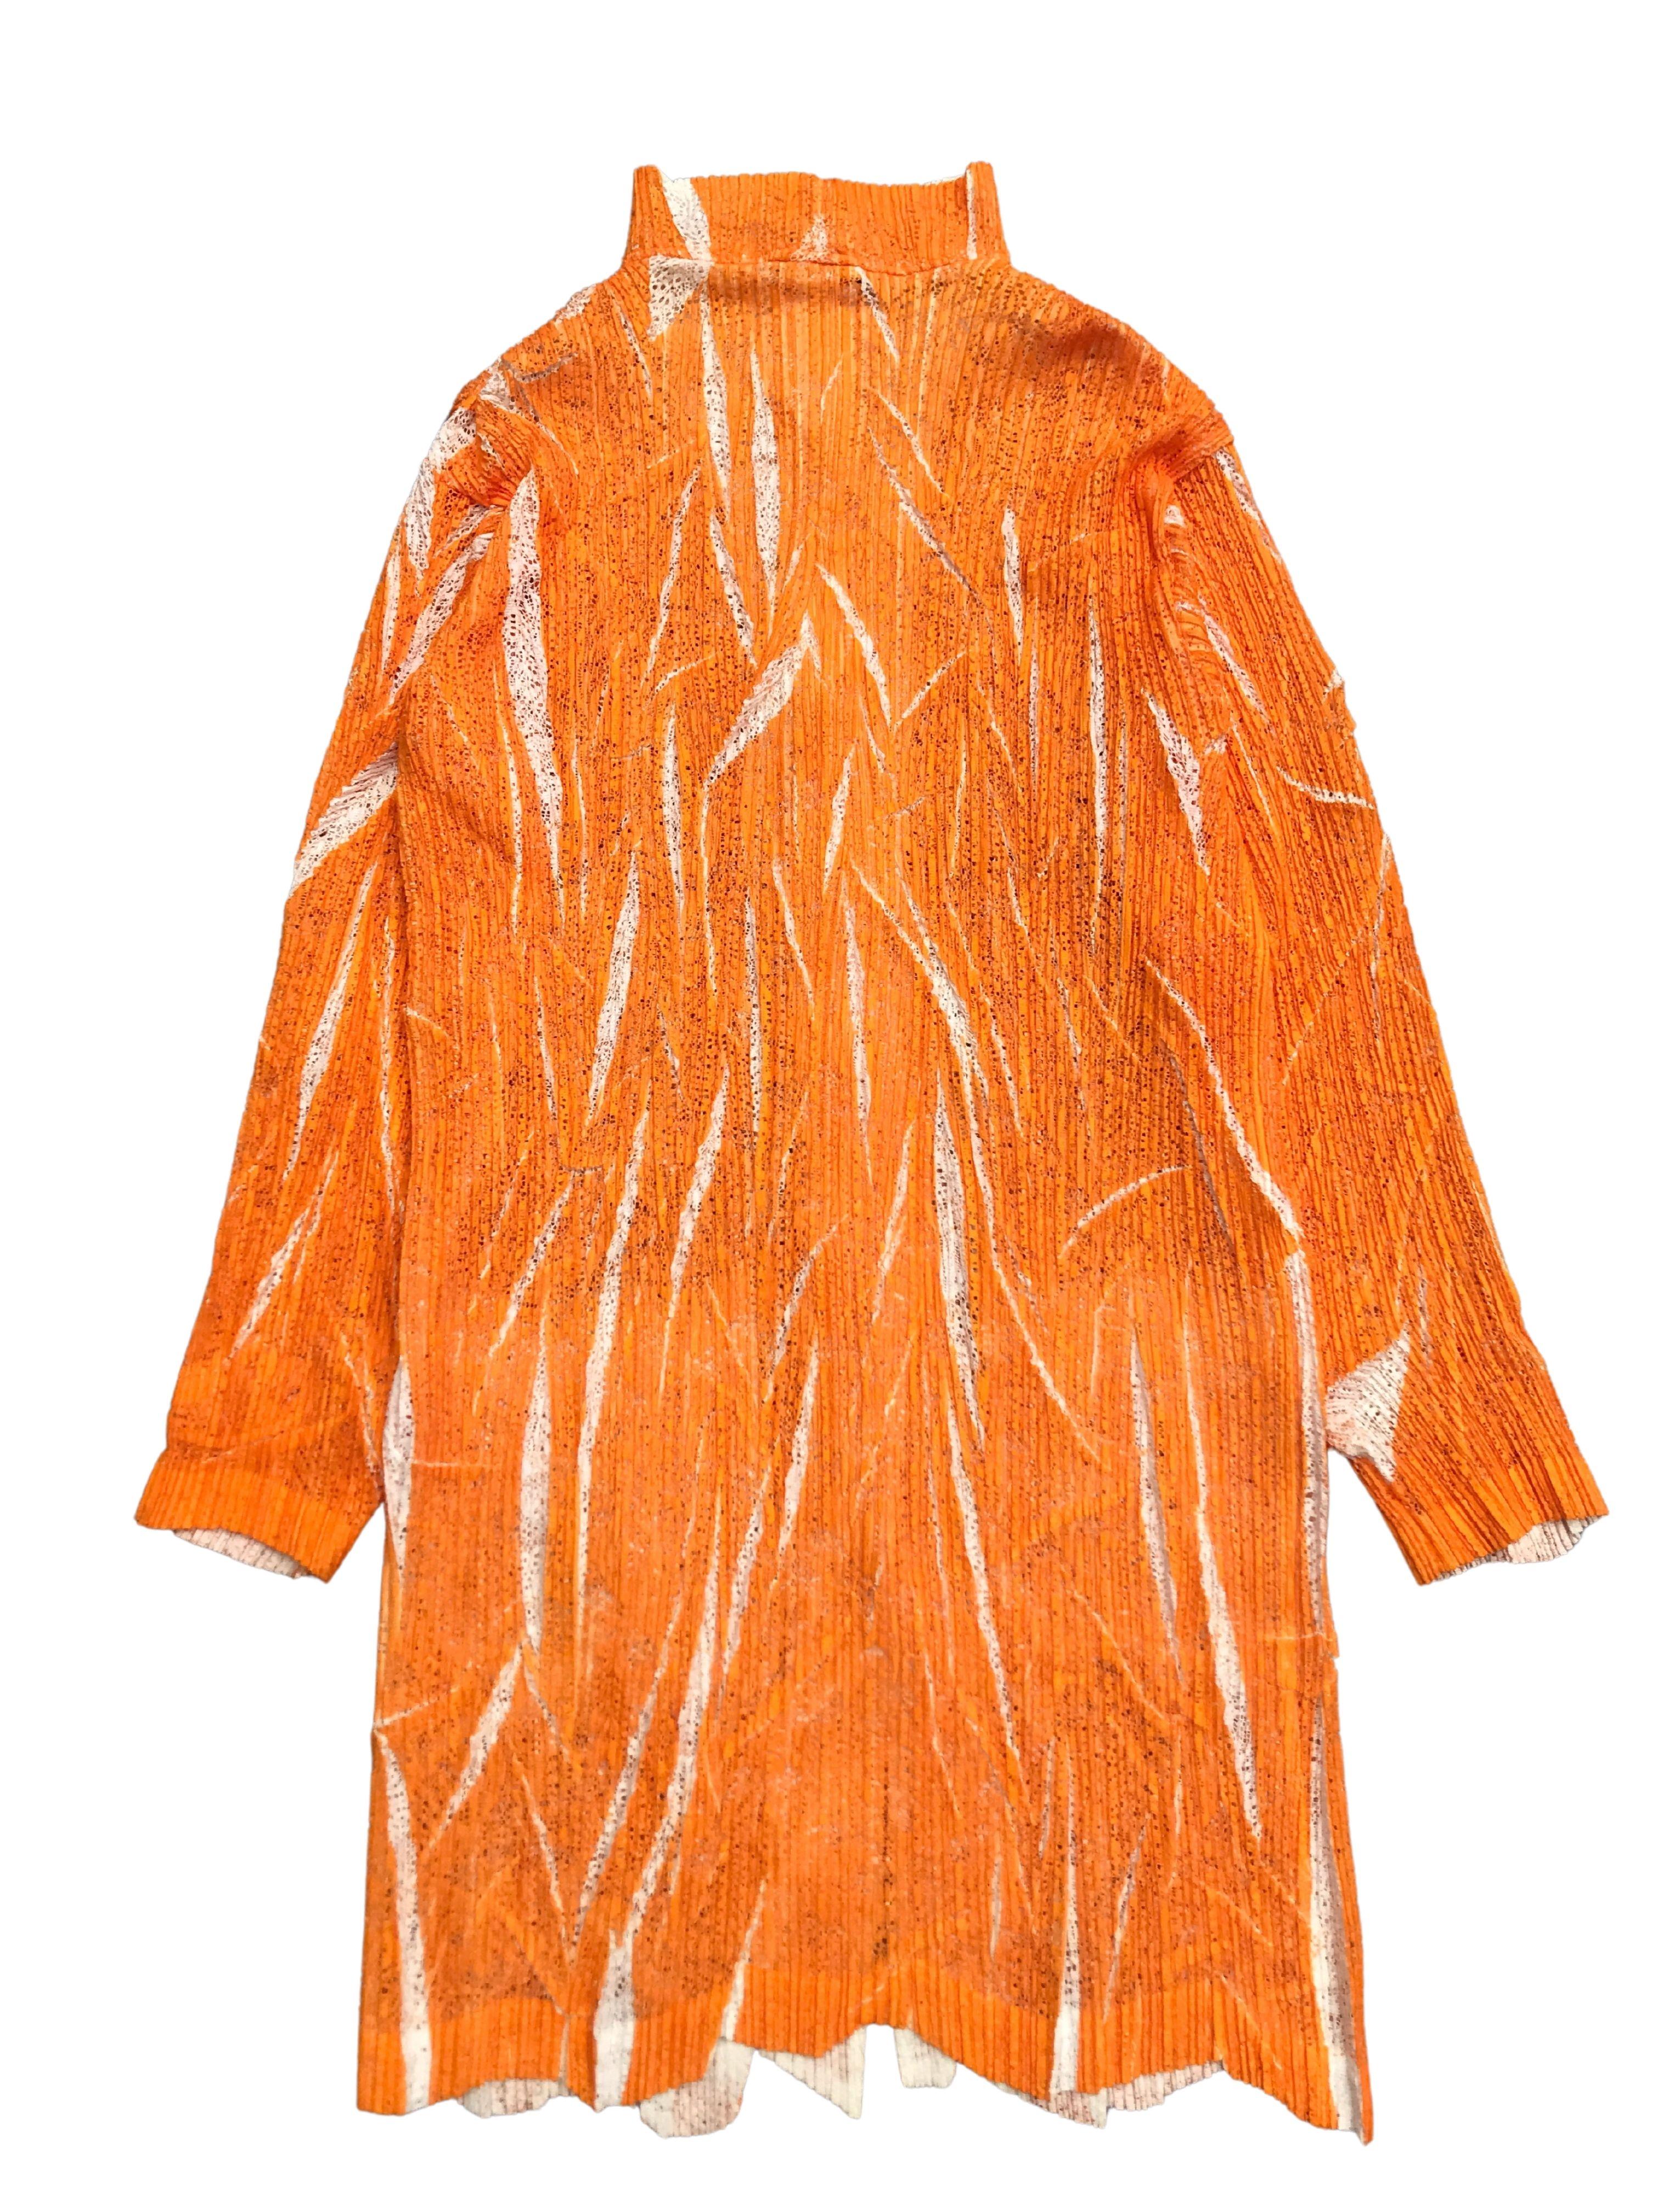 Orange Issey Miyake Stretchy Pleats Top, Autumn Winter 1996